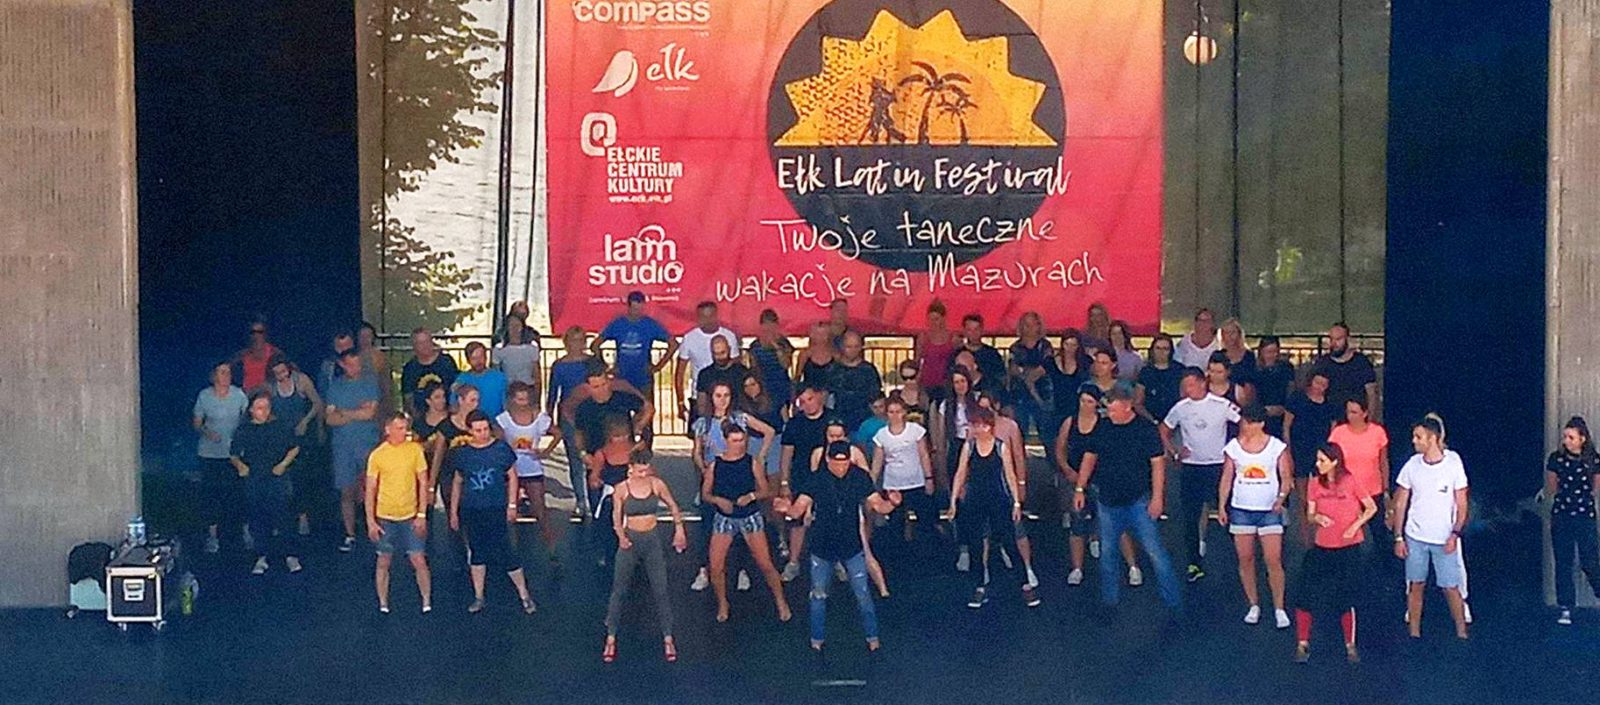  Ełk Latin Festival